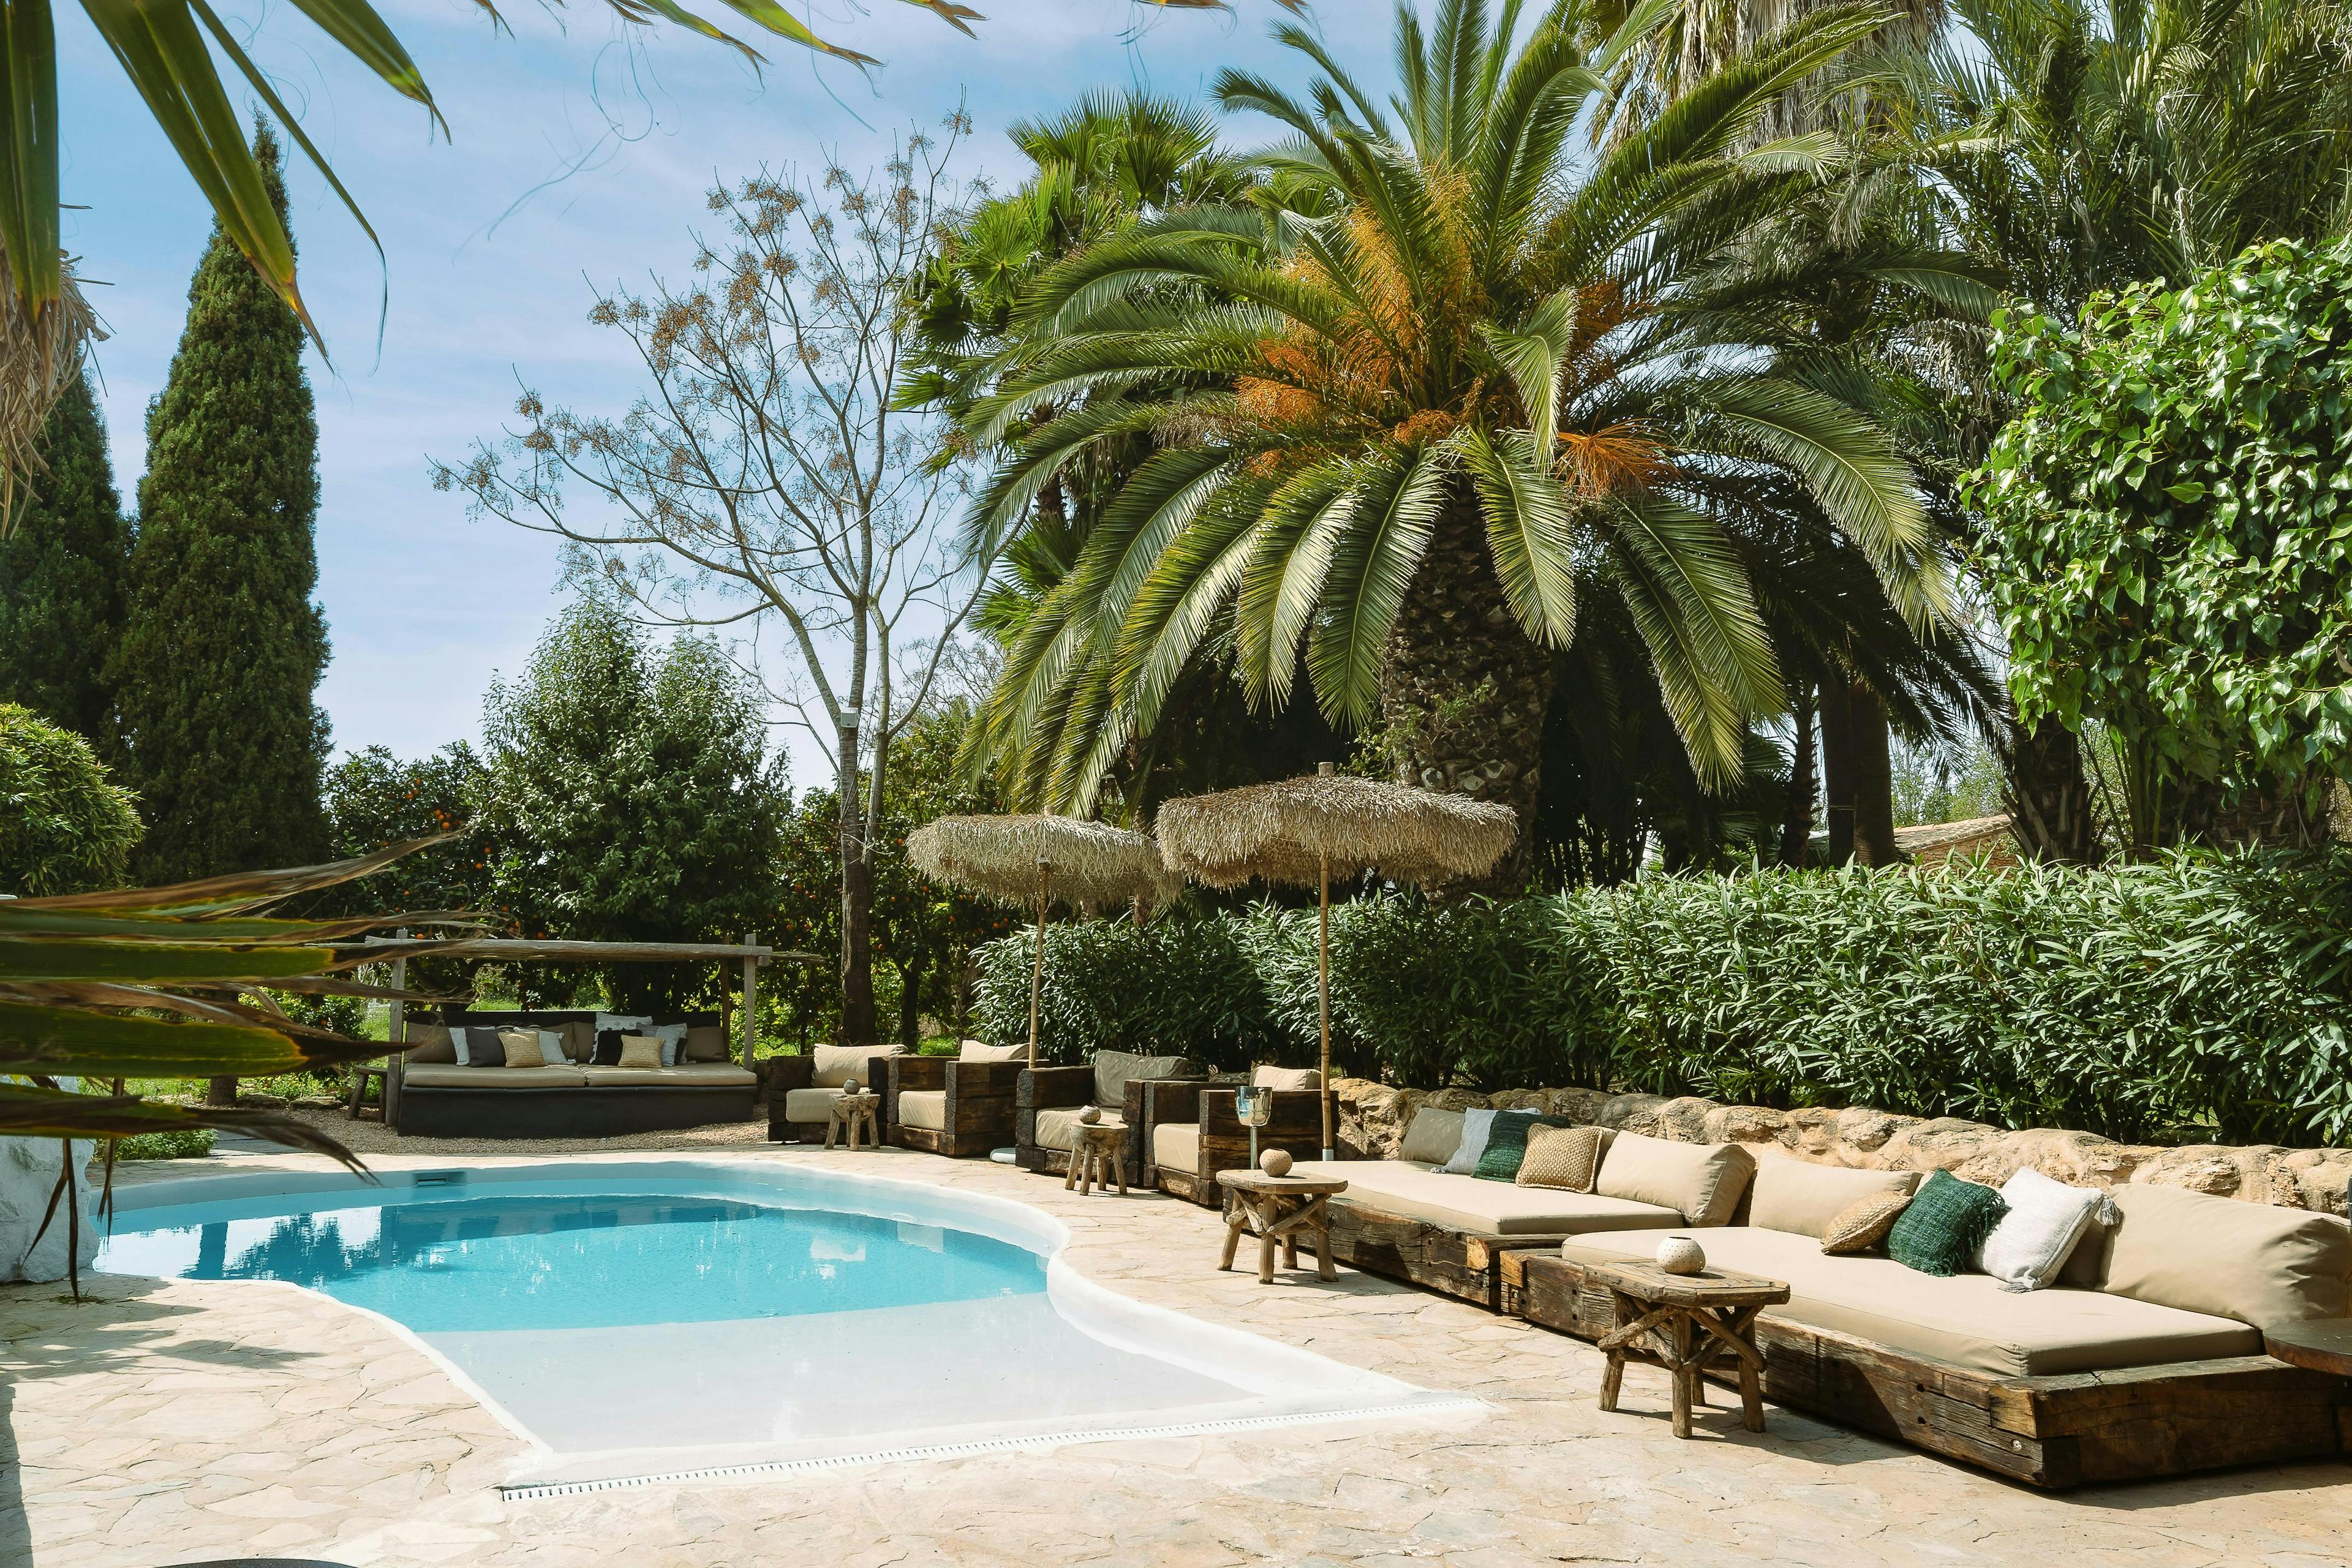 summer backyard garden hotel resort pool villa patio couch swimming pool